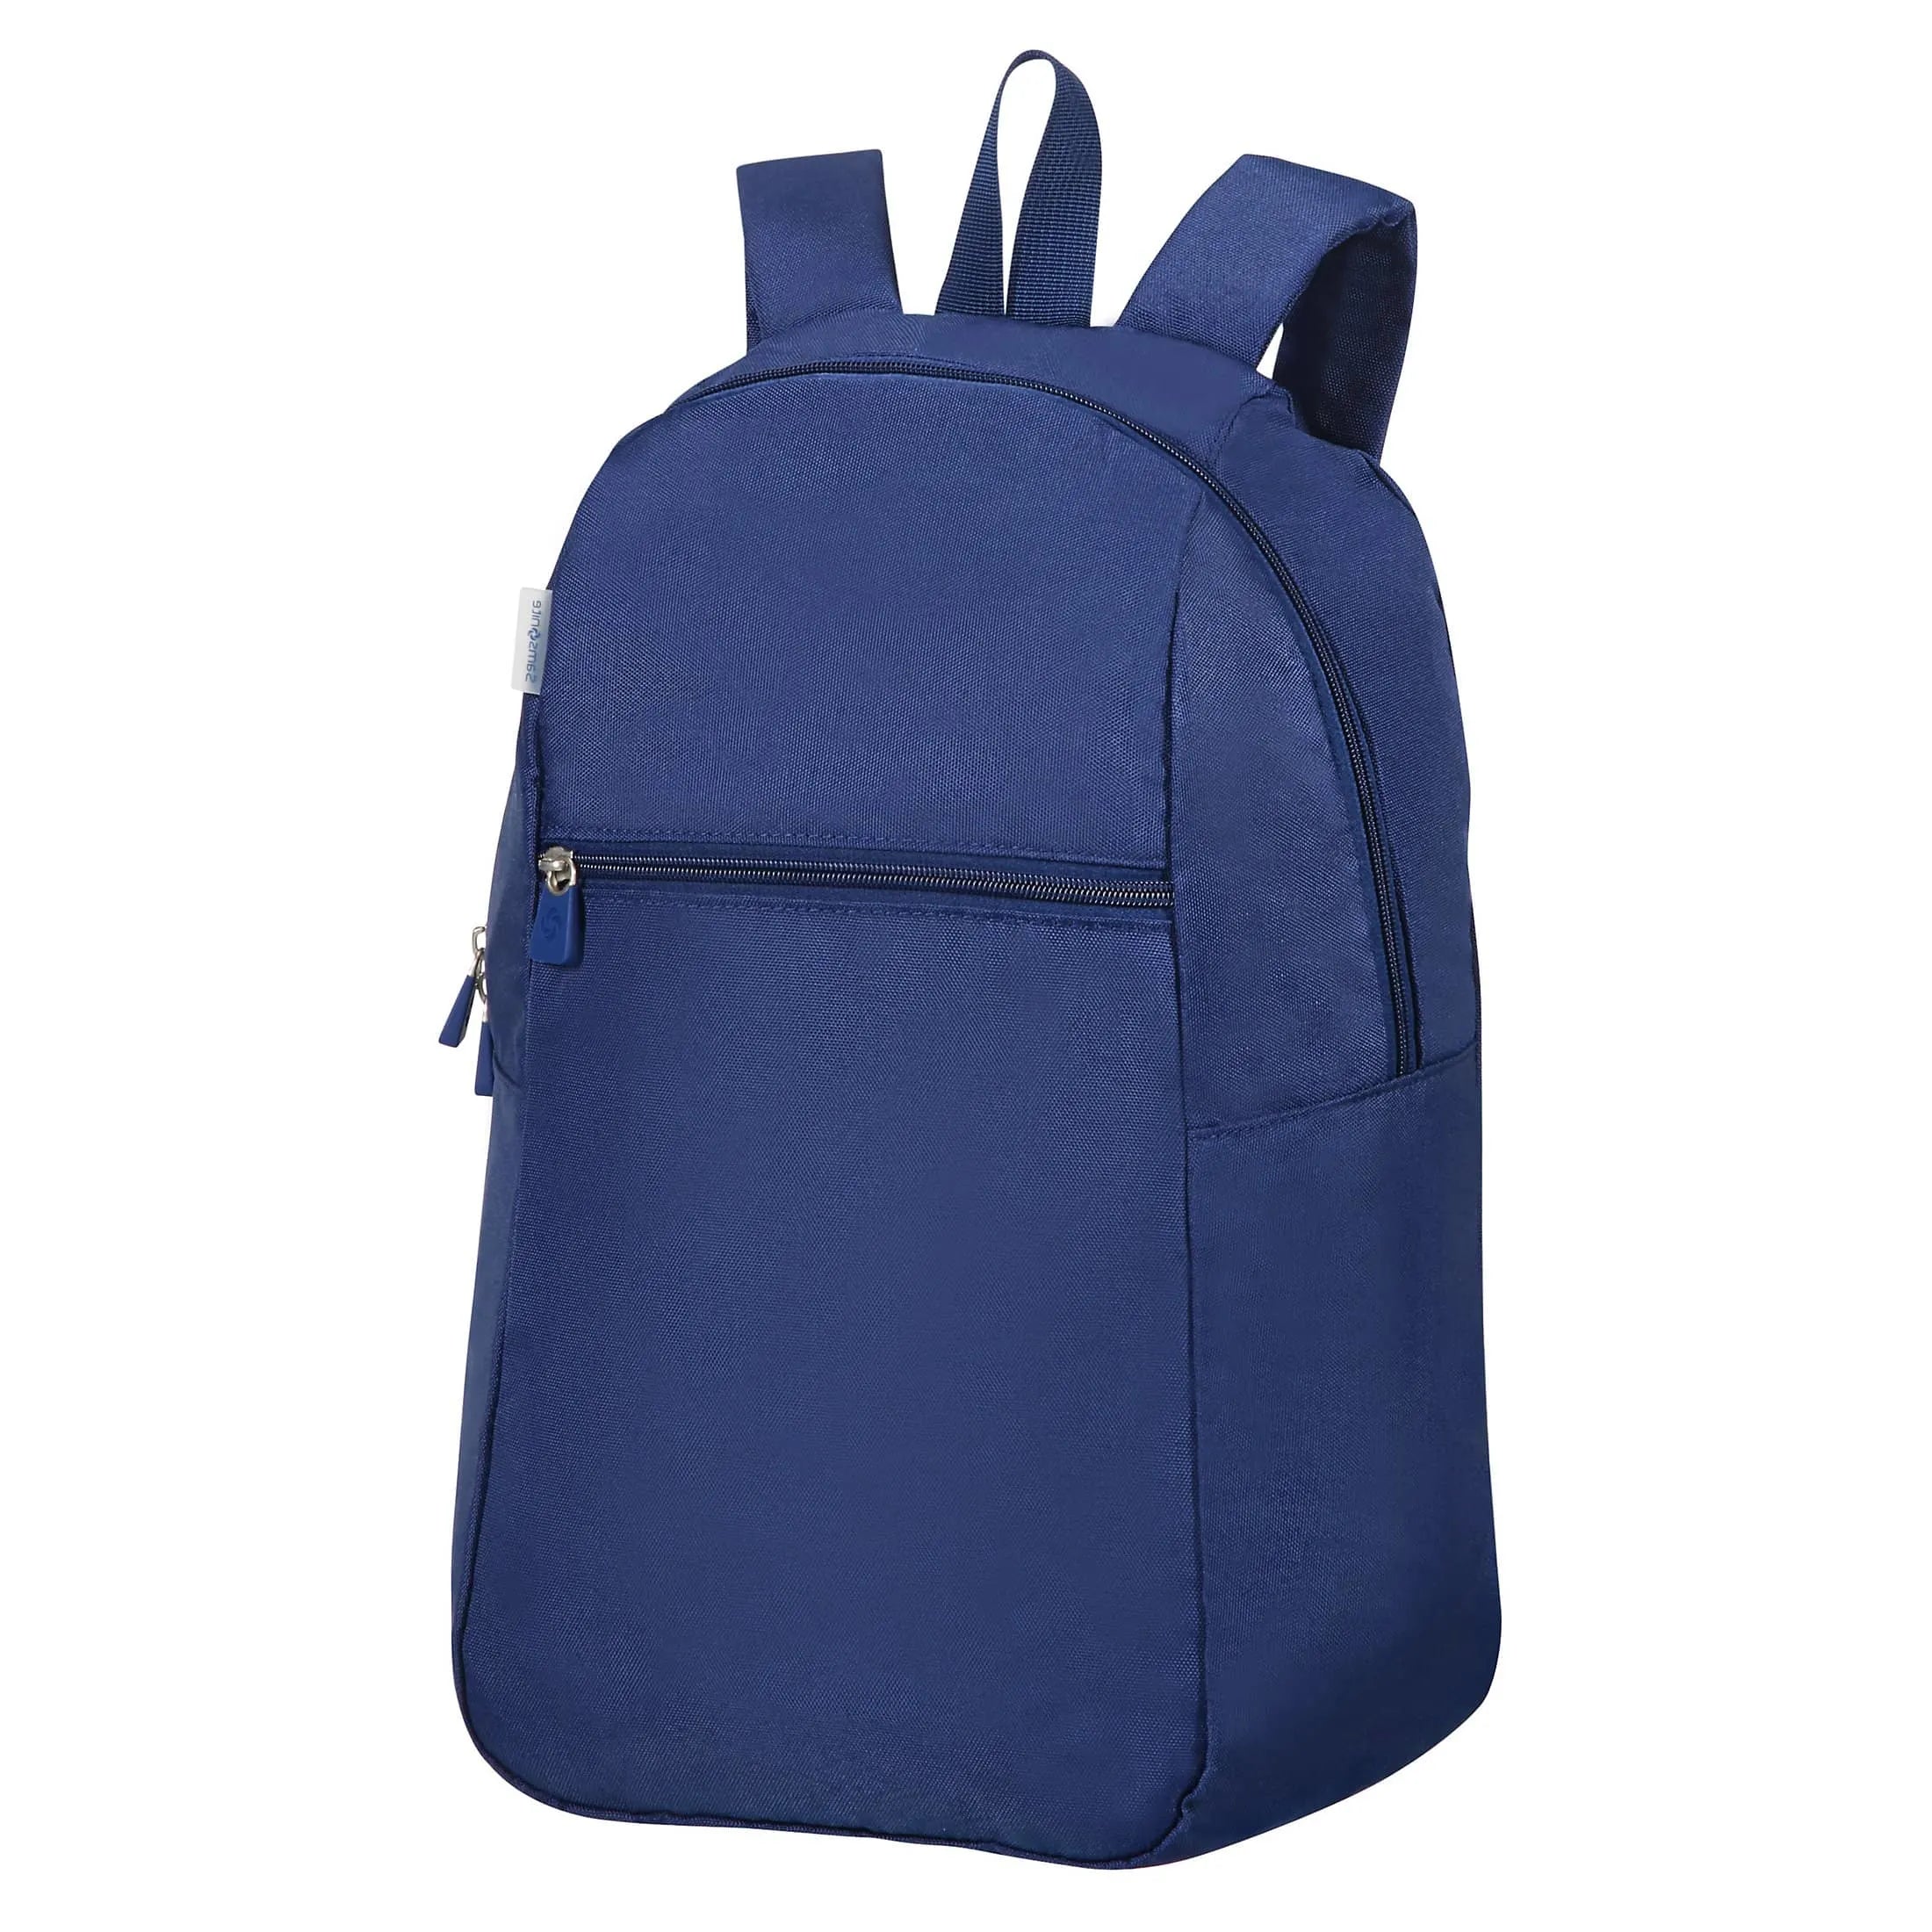 Samsonite Travel Accessories Foldable Backpack 44 cm - midnight blue